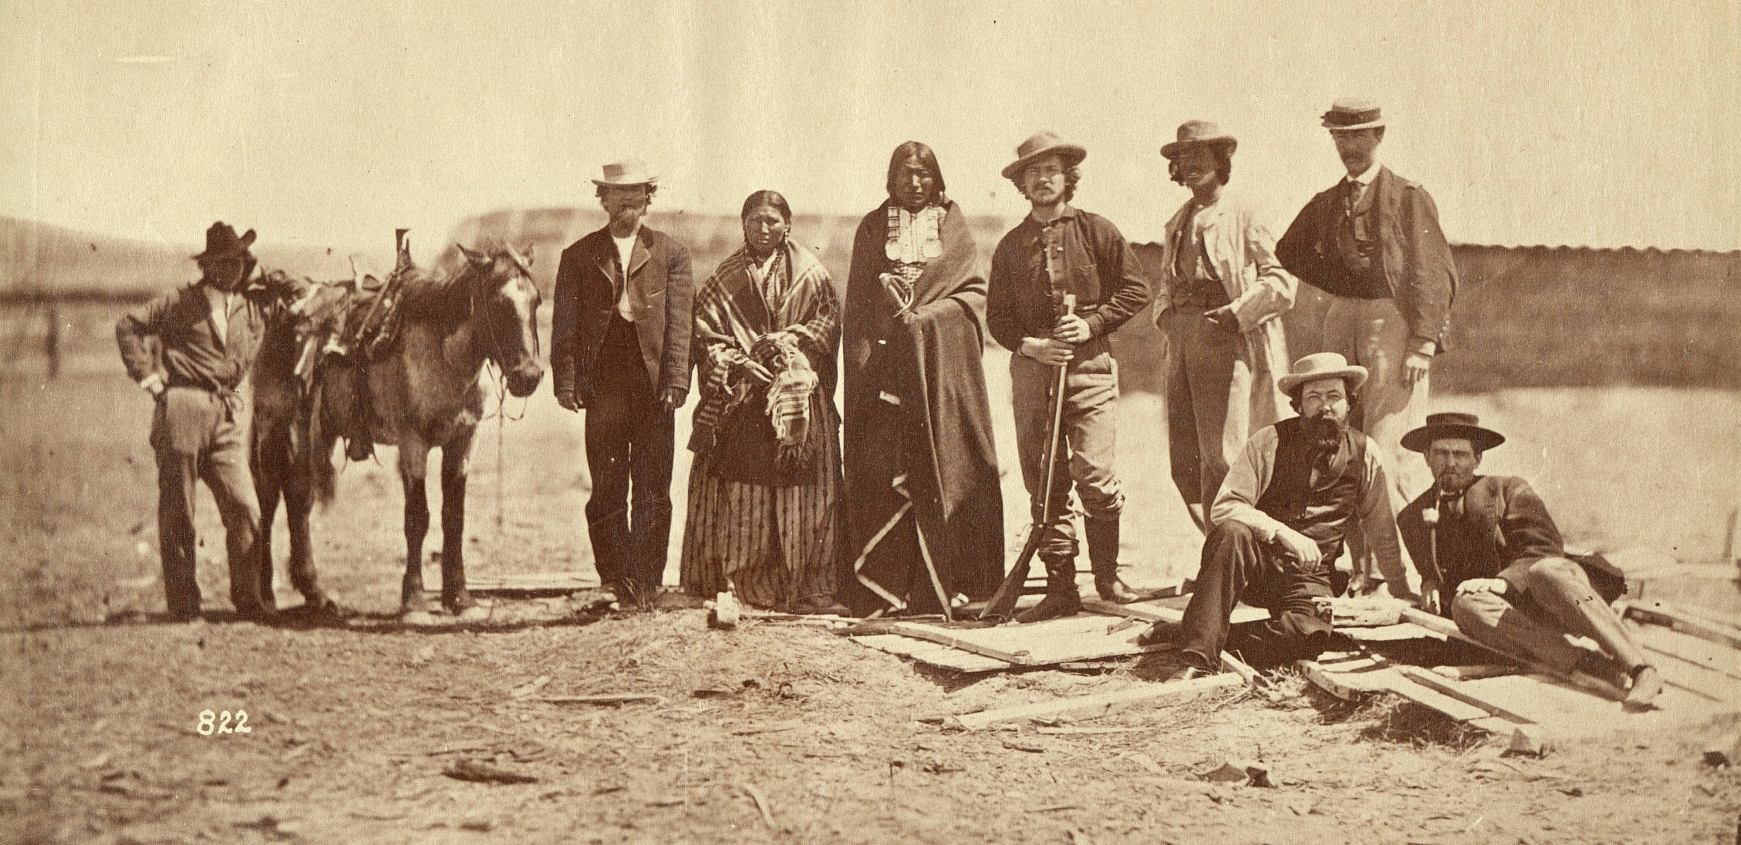 http://www.american-tribes.com/messageboards/dietmar/1868gardner6.jpg